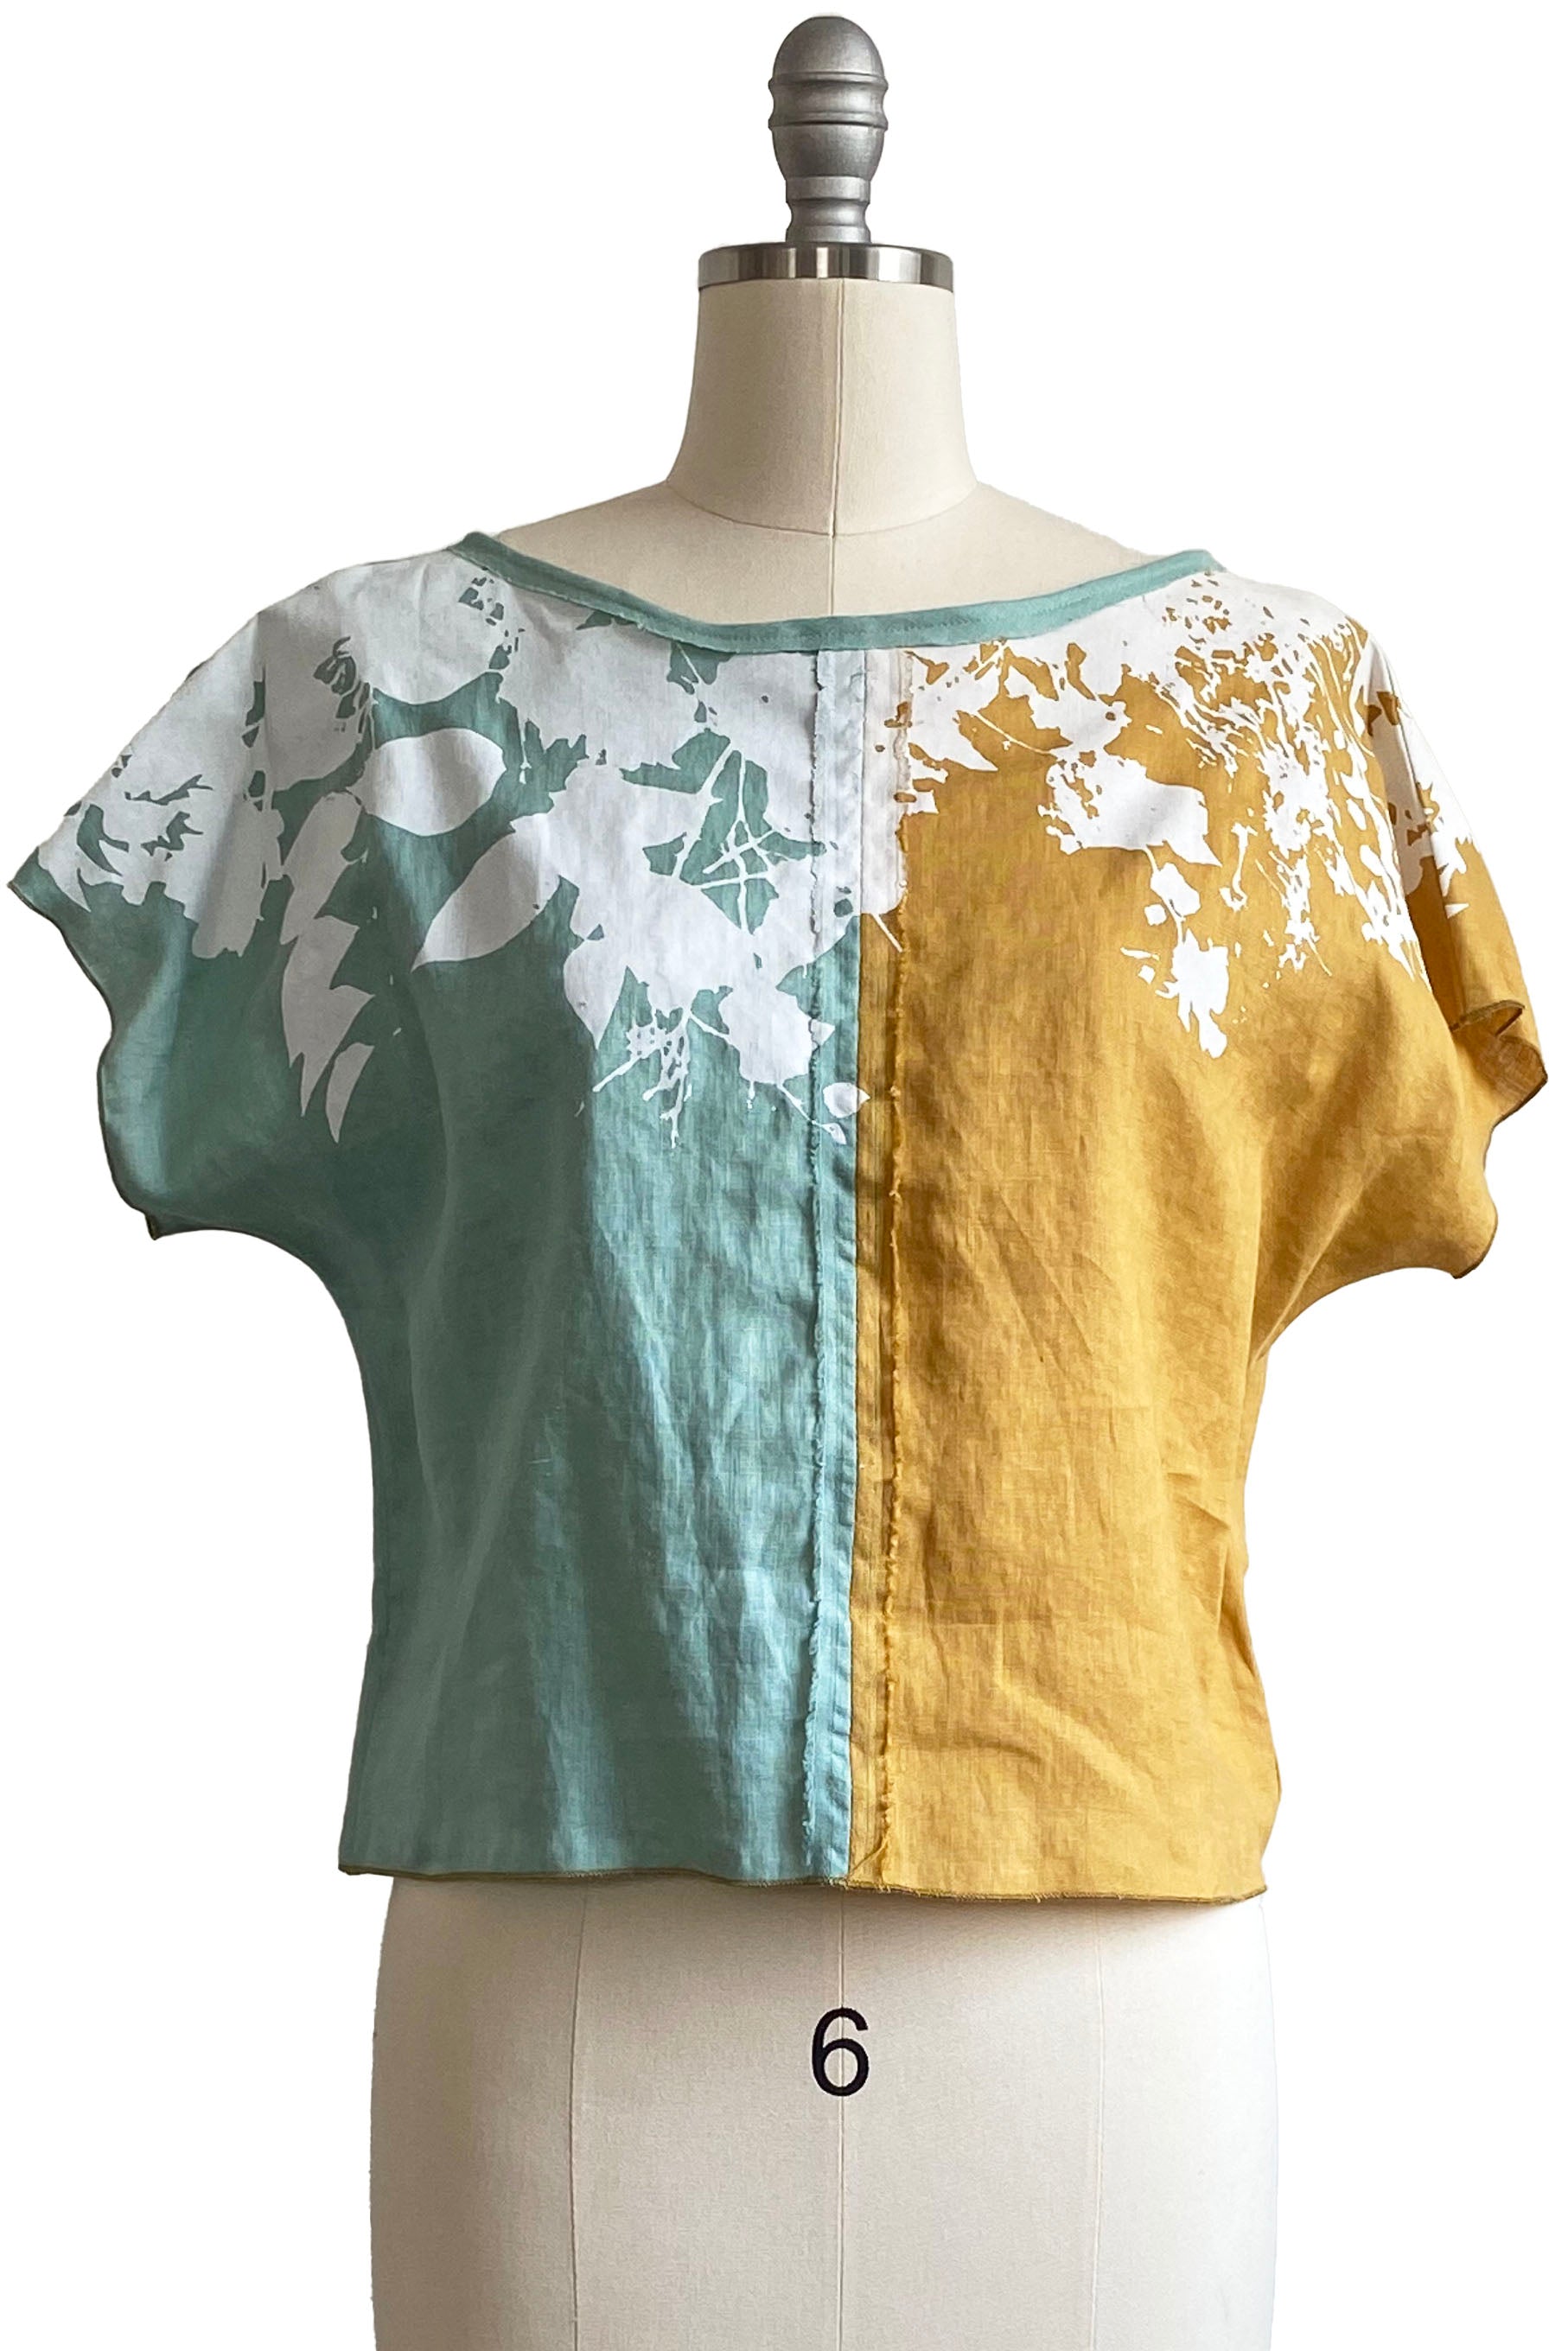 Jen Crop Top w/ Bramble Print - Split Goldenrod & Turquoise - S/M